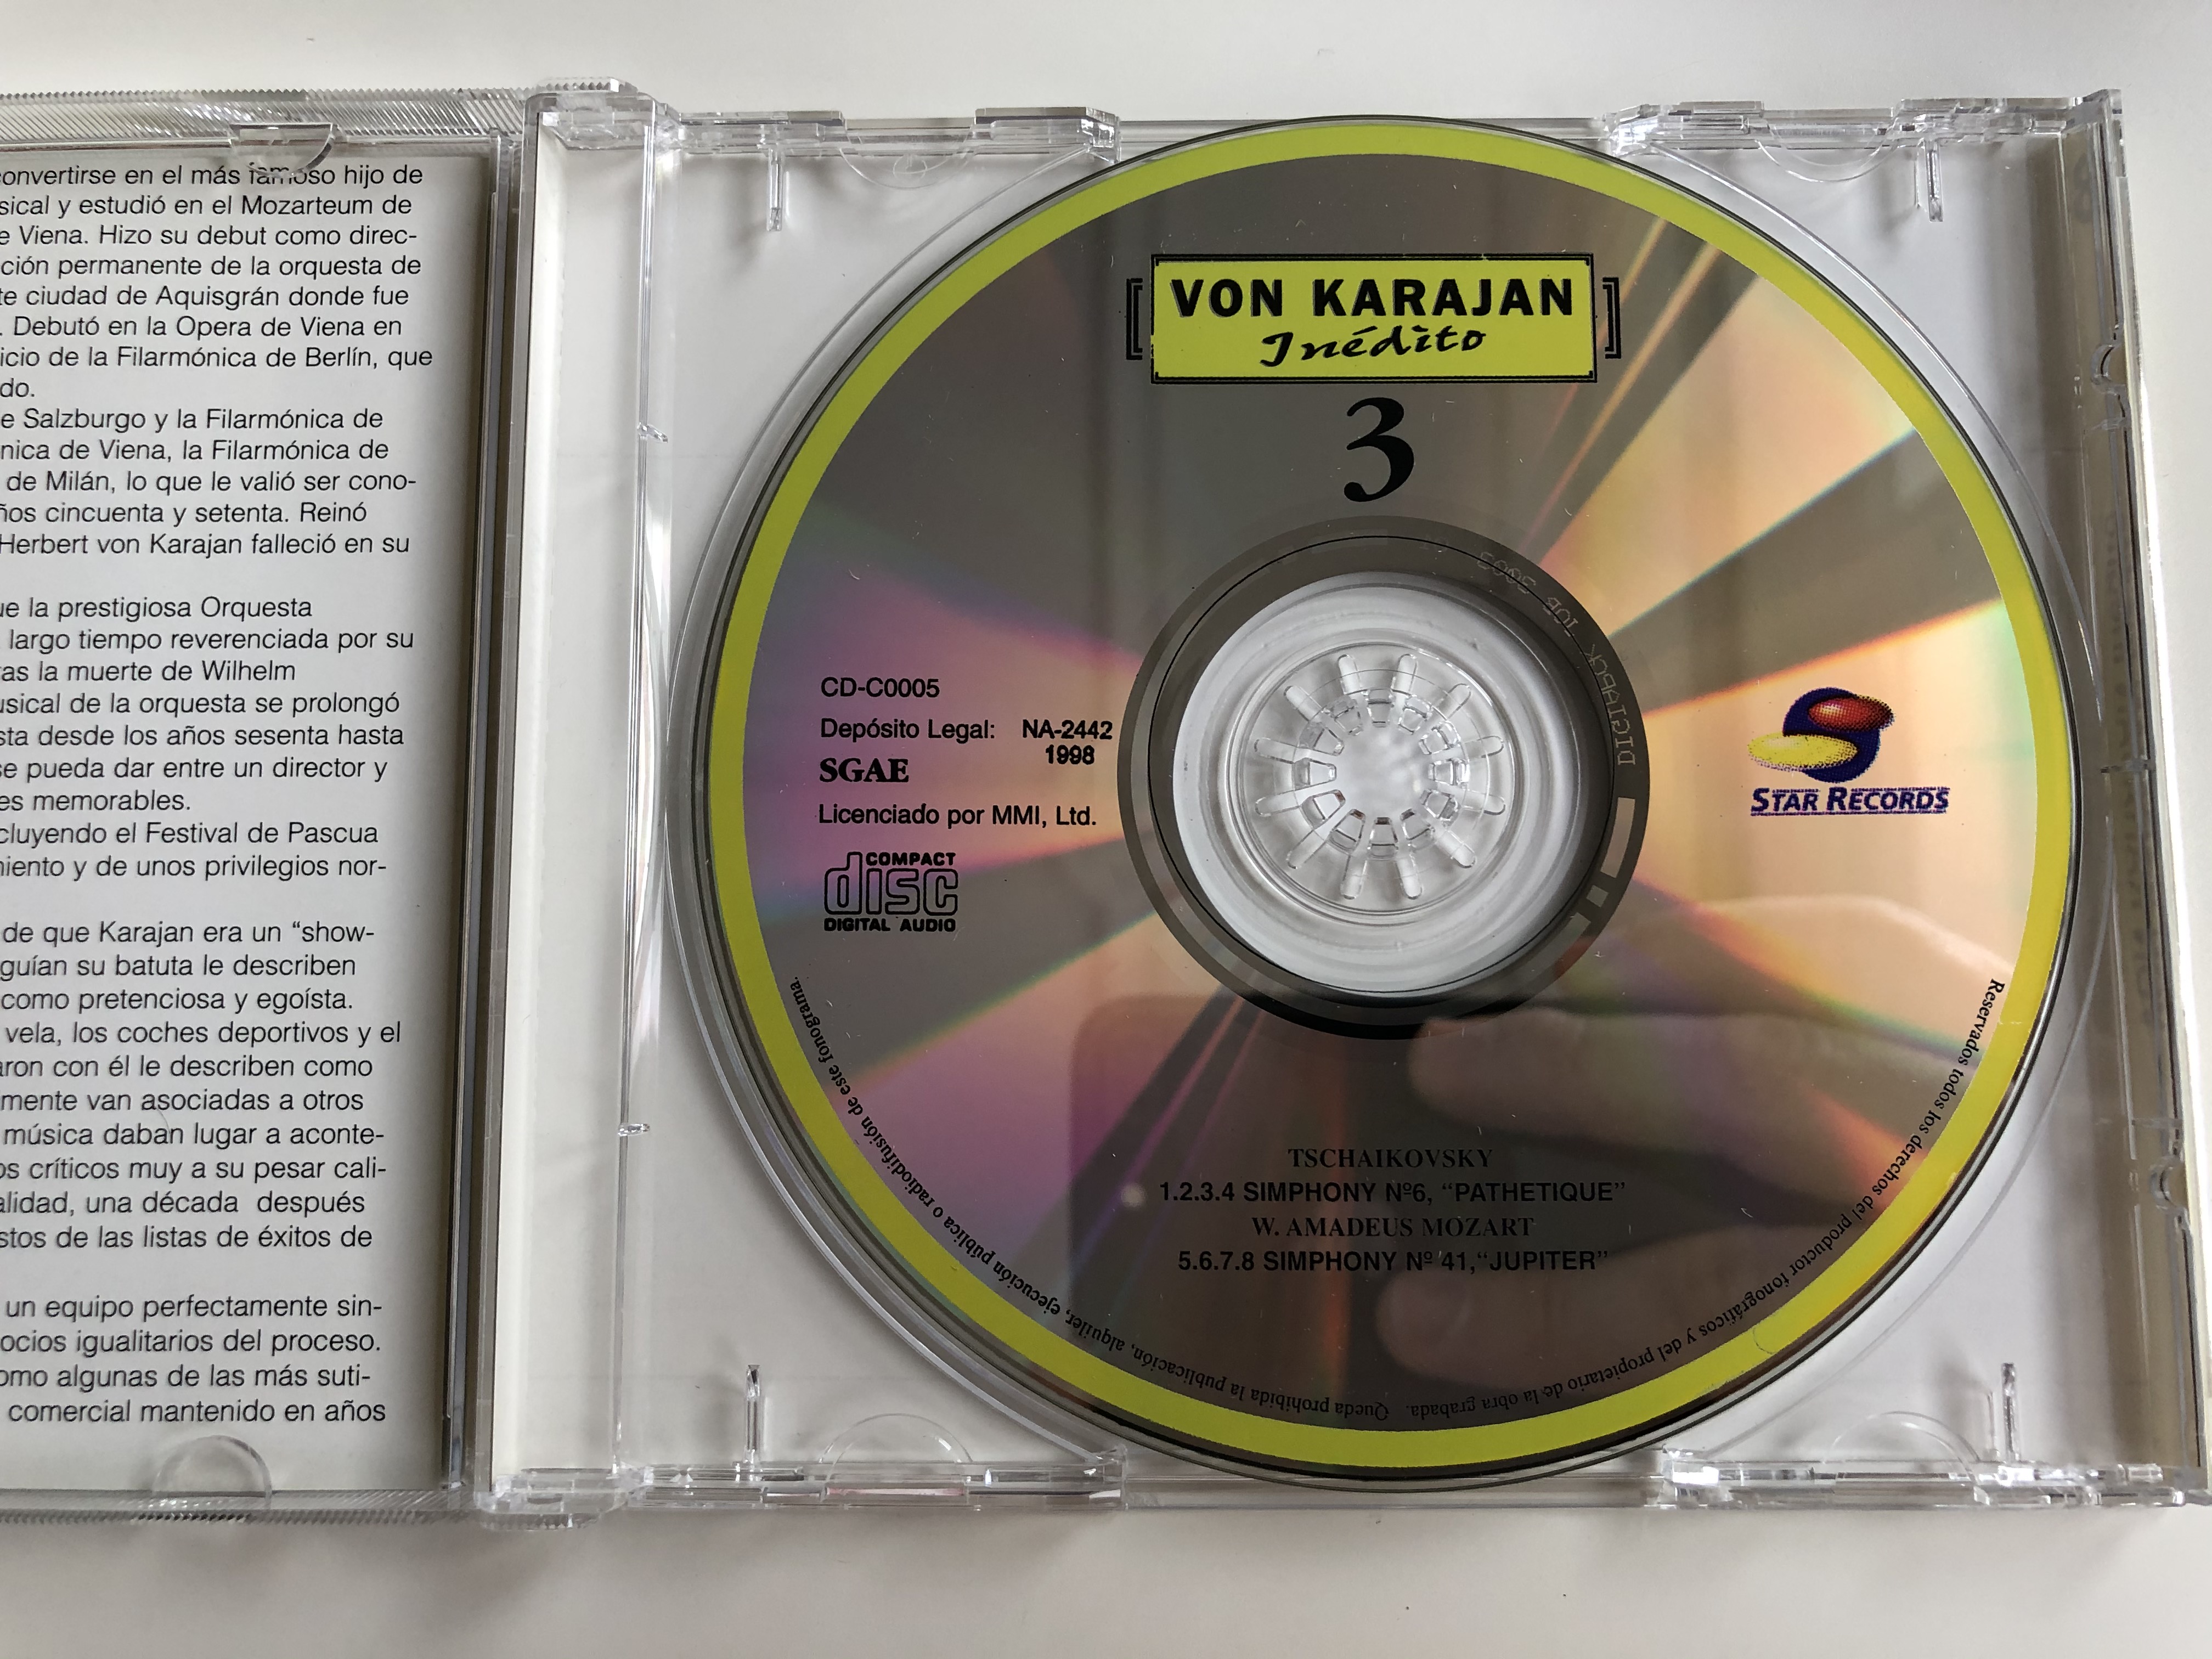 von-karajan-in-dito-3-mozart-tschaikovsky-star-records-audio-cd-1998-cd-c0005-3-.jpg